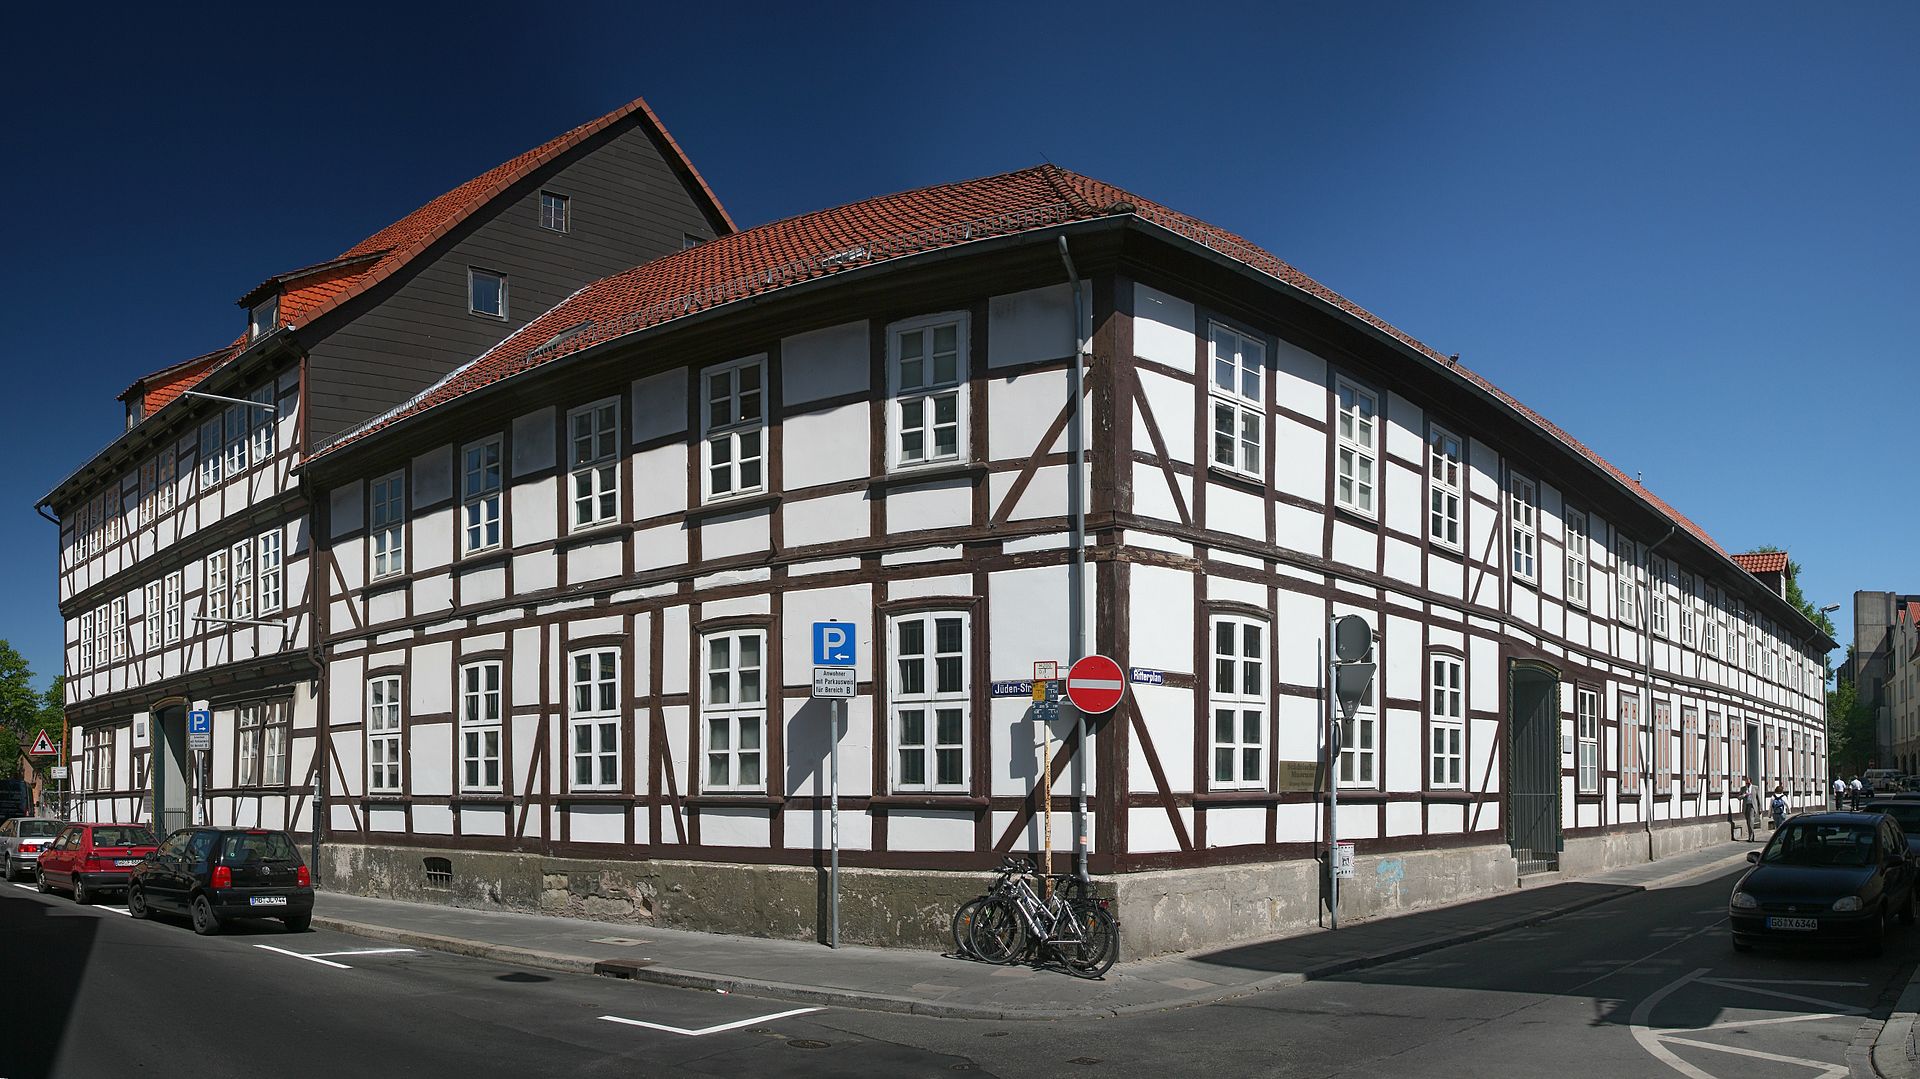 Foto: Museum Göttingen ; https://commons.wikimedia.org/wiki/File:Goe_Ritterplan_pano.jpg